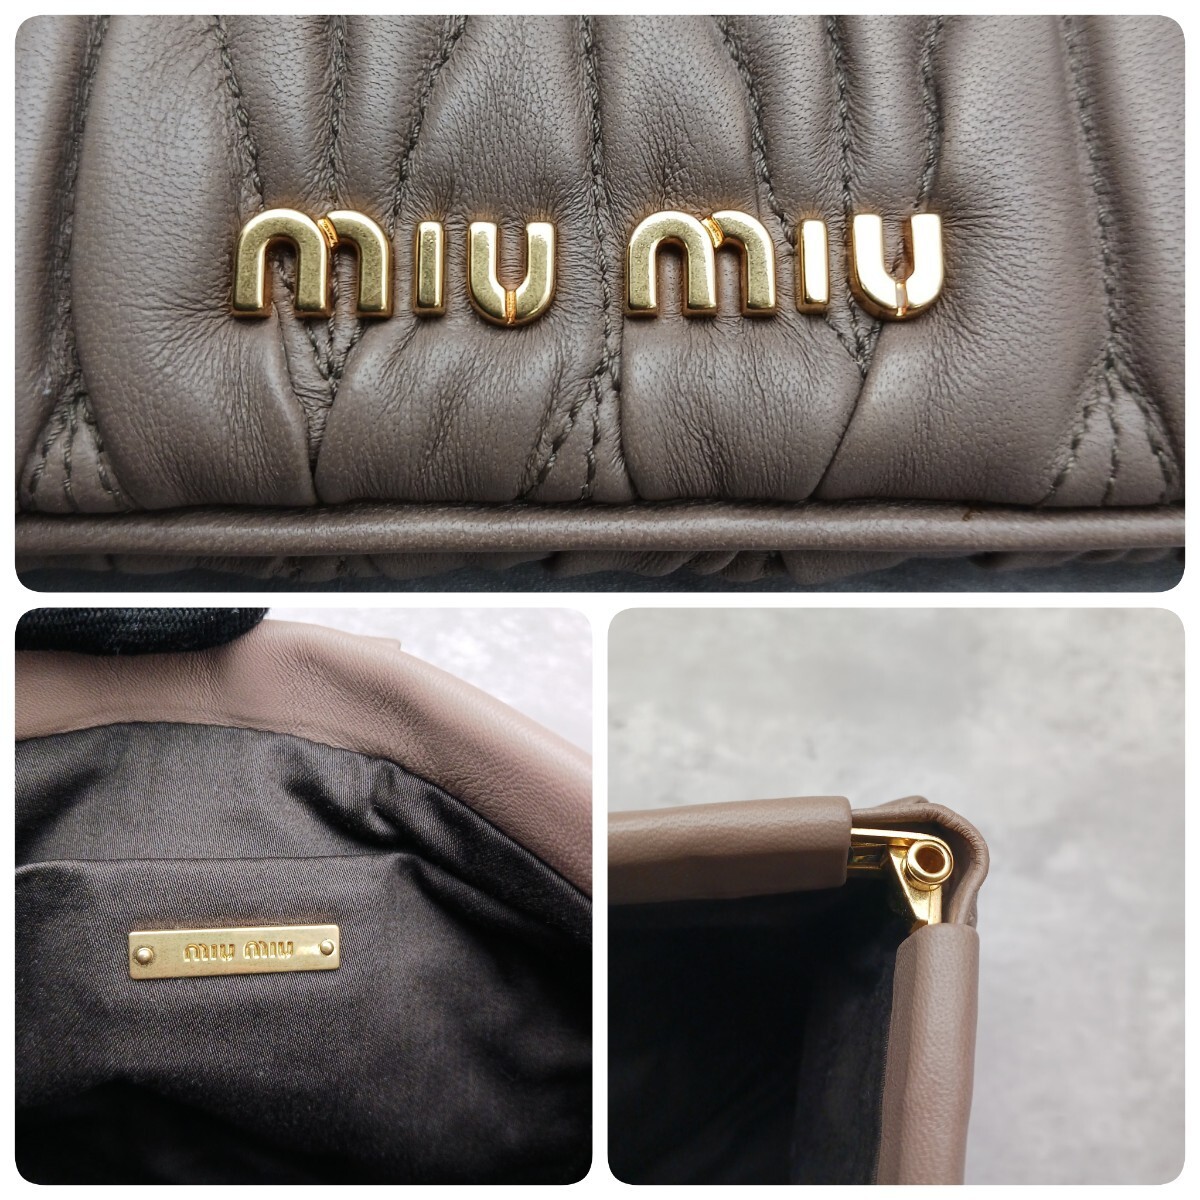  ultimate beautiful goods MIUMIU MiuMiu lady's clutch bag handbag ma tera se beige bag-in-bag organizer Gold metal fittings metal Logo 